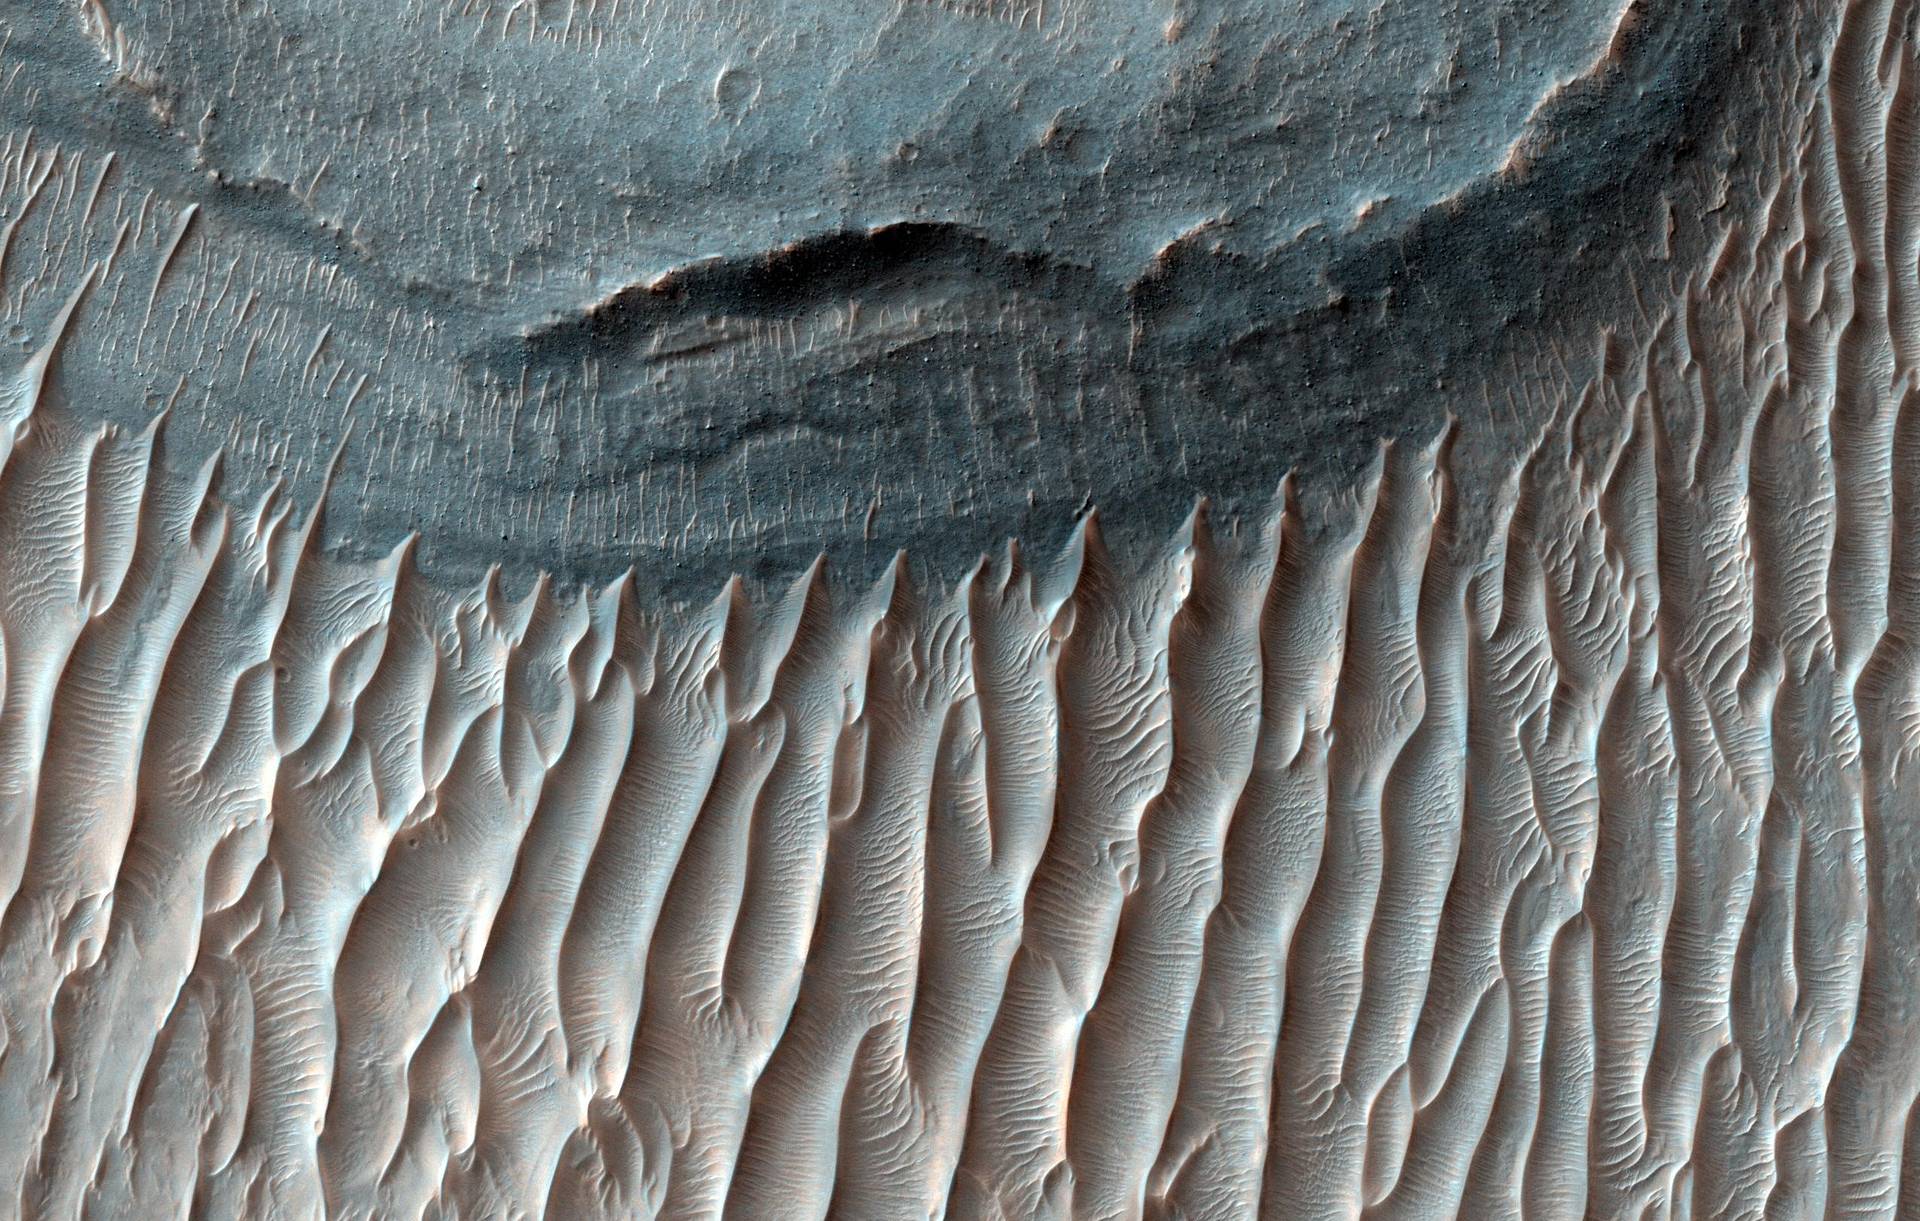 ExoMars probe: Large deposits of ice found on Mars